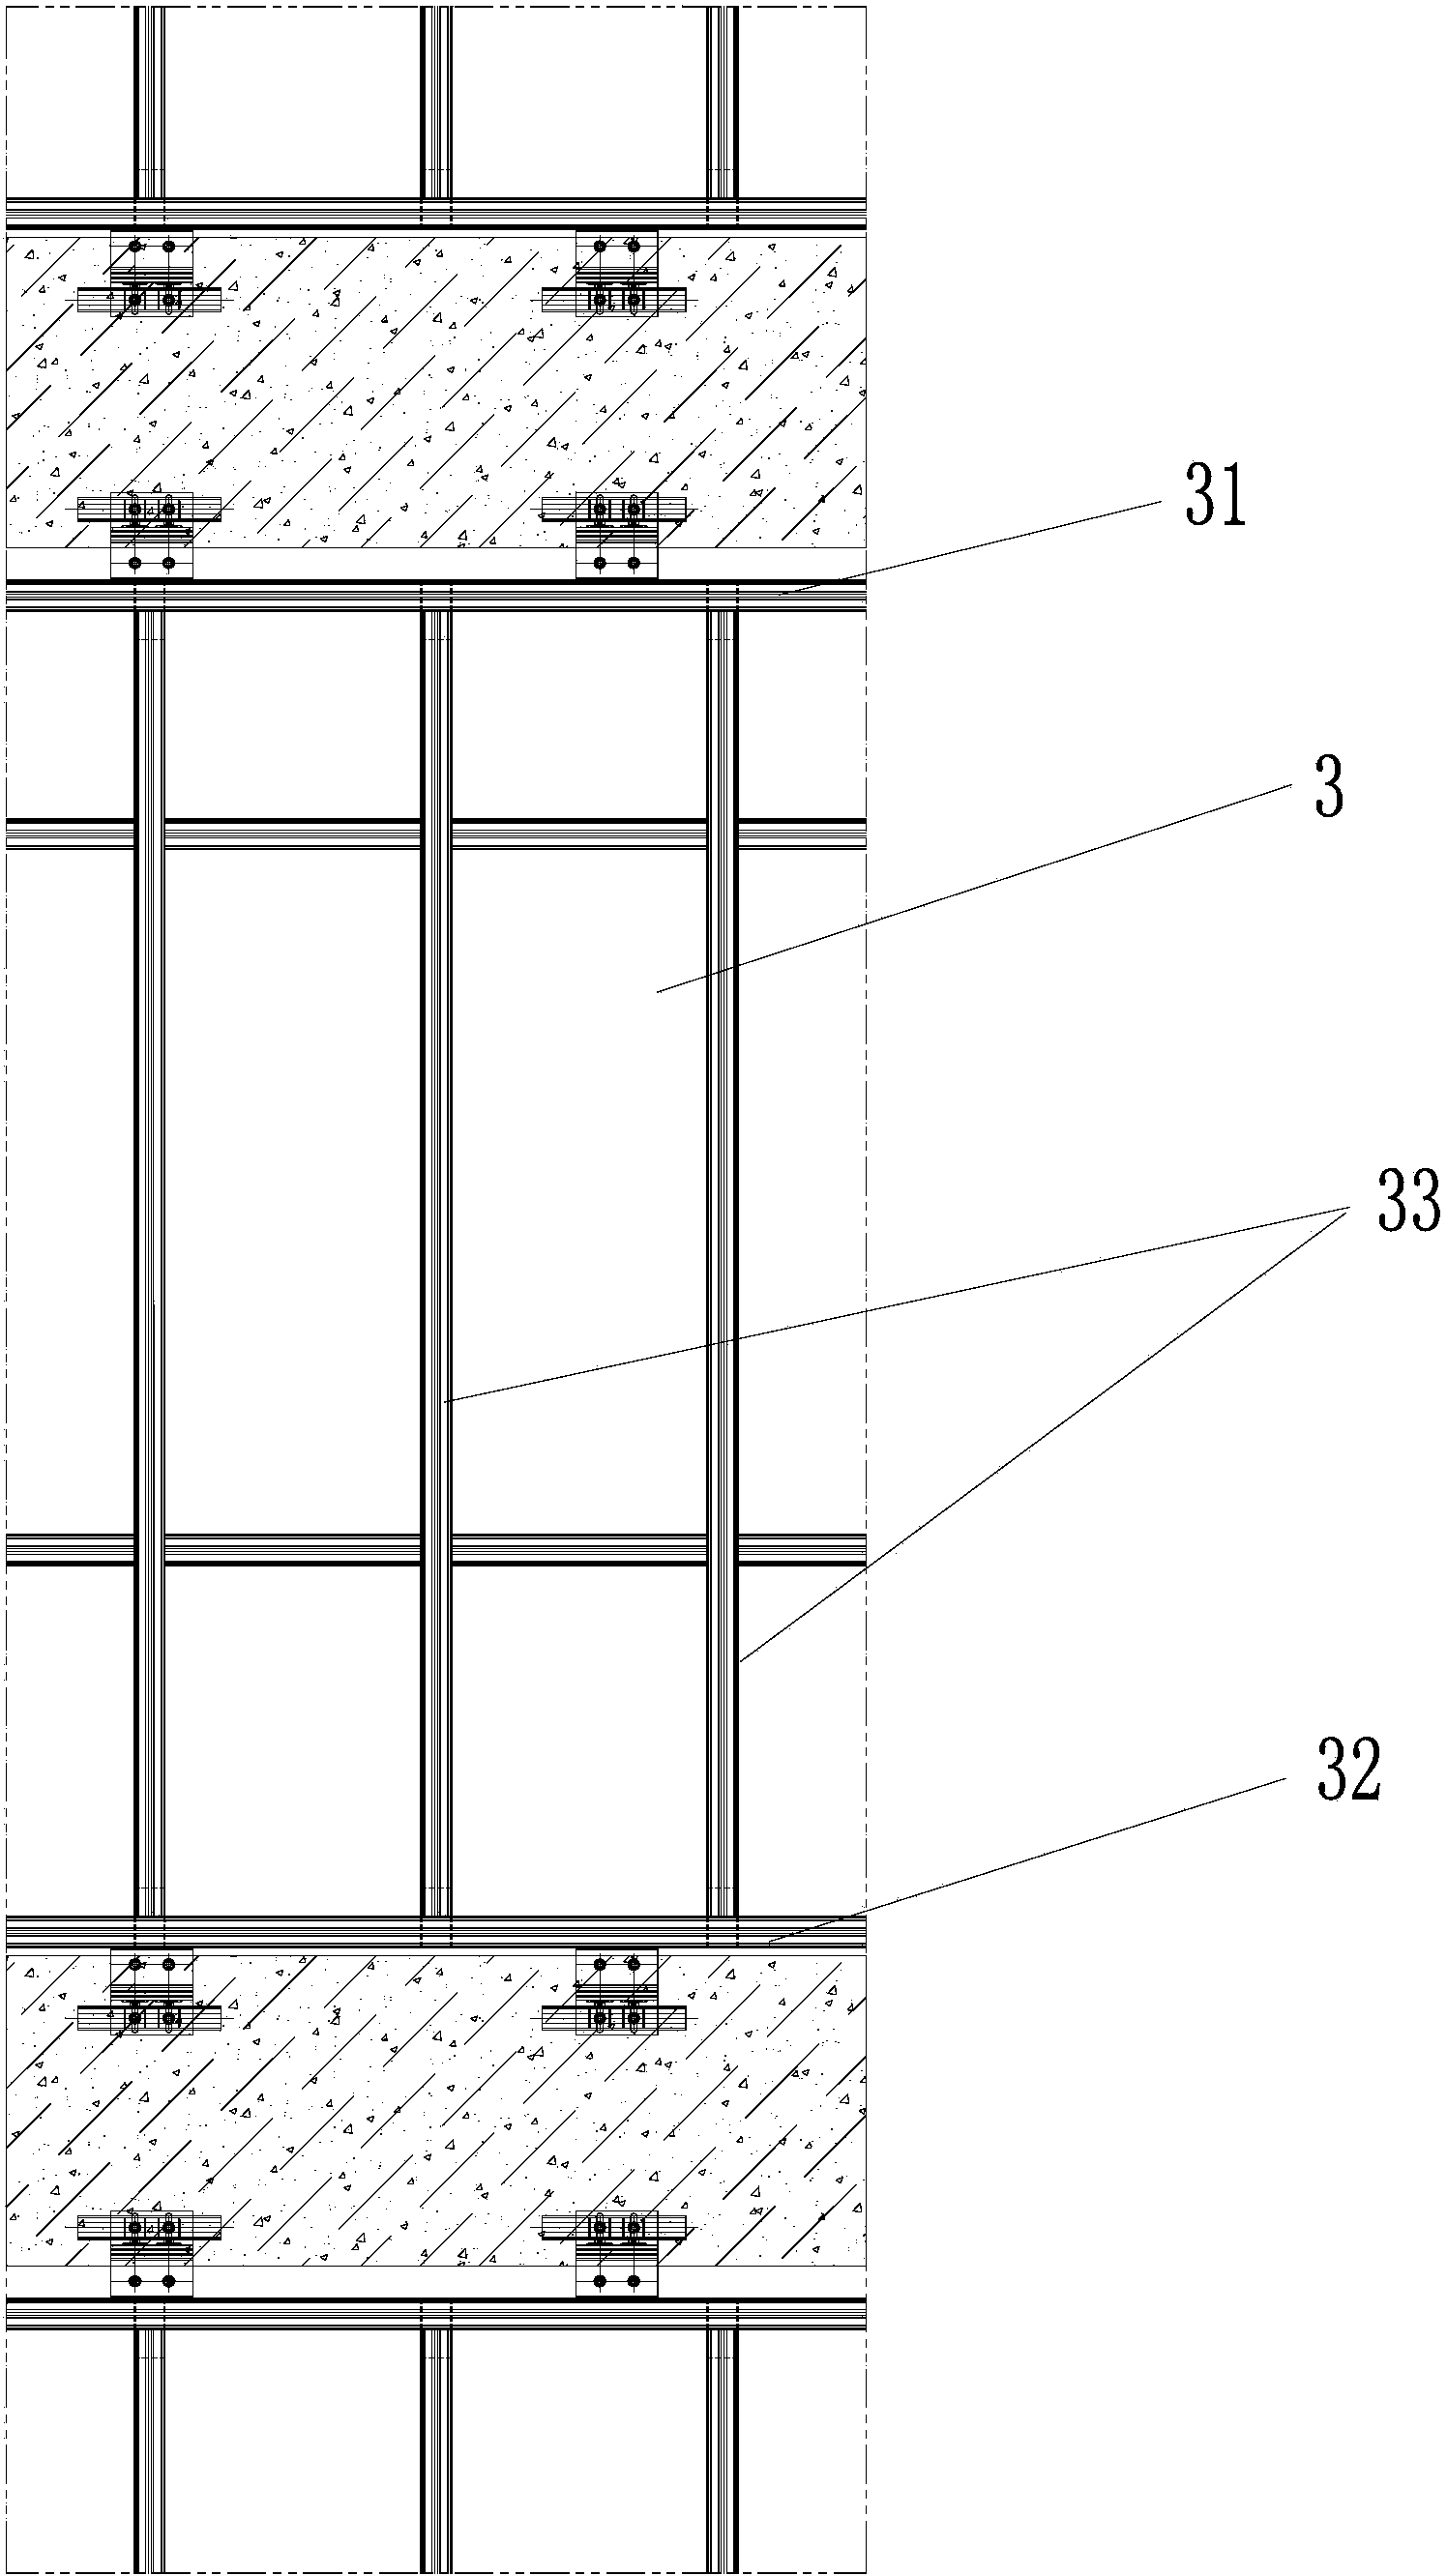 Novel member type curtain wall system